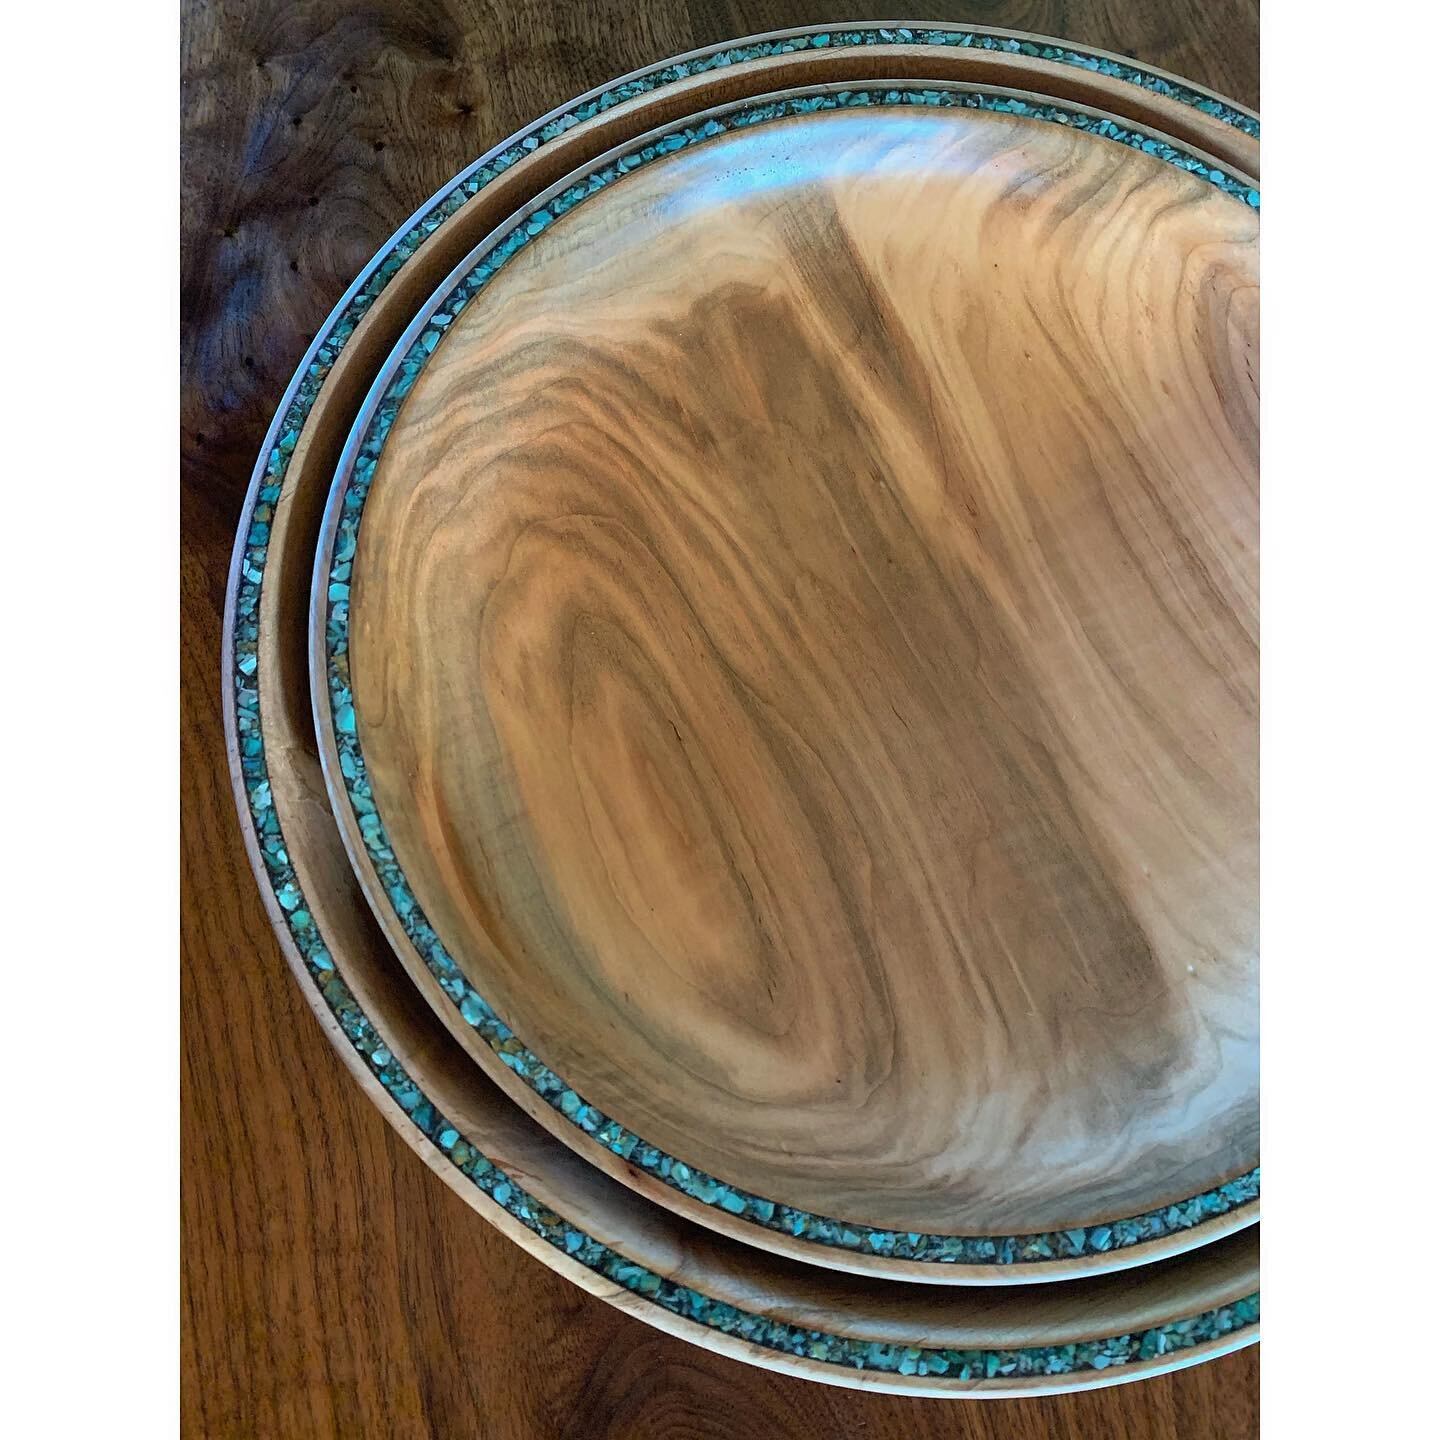 Nesting Ambrosia Maple Rim Bowls with Cerrillos Turquoise Inlay. 
.
.
.
.

#woodturning #woodenbowl  #interiordesign #santafenm #handcrafted  #newmexico  #bowls #homegoods #albuquerque #kitchendecor #ambrosiamaple #turquoise #inlay